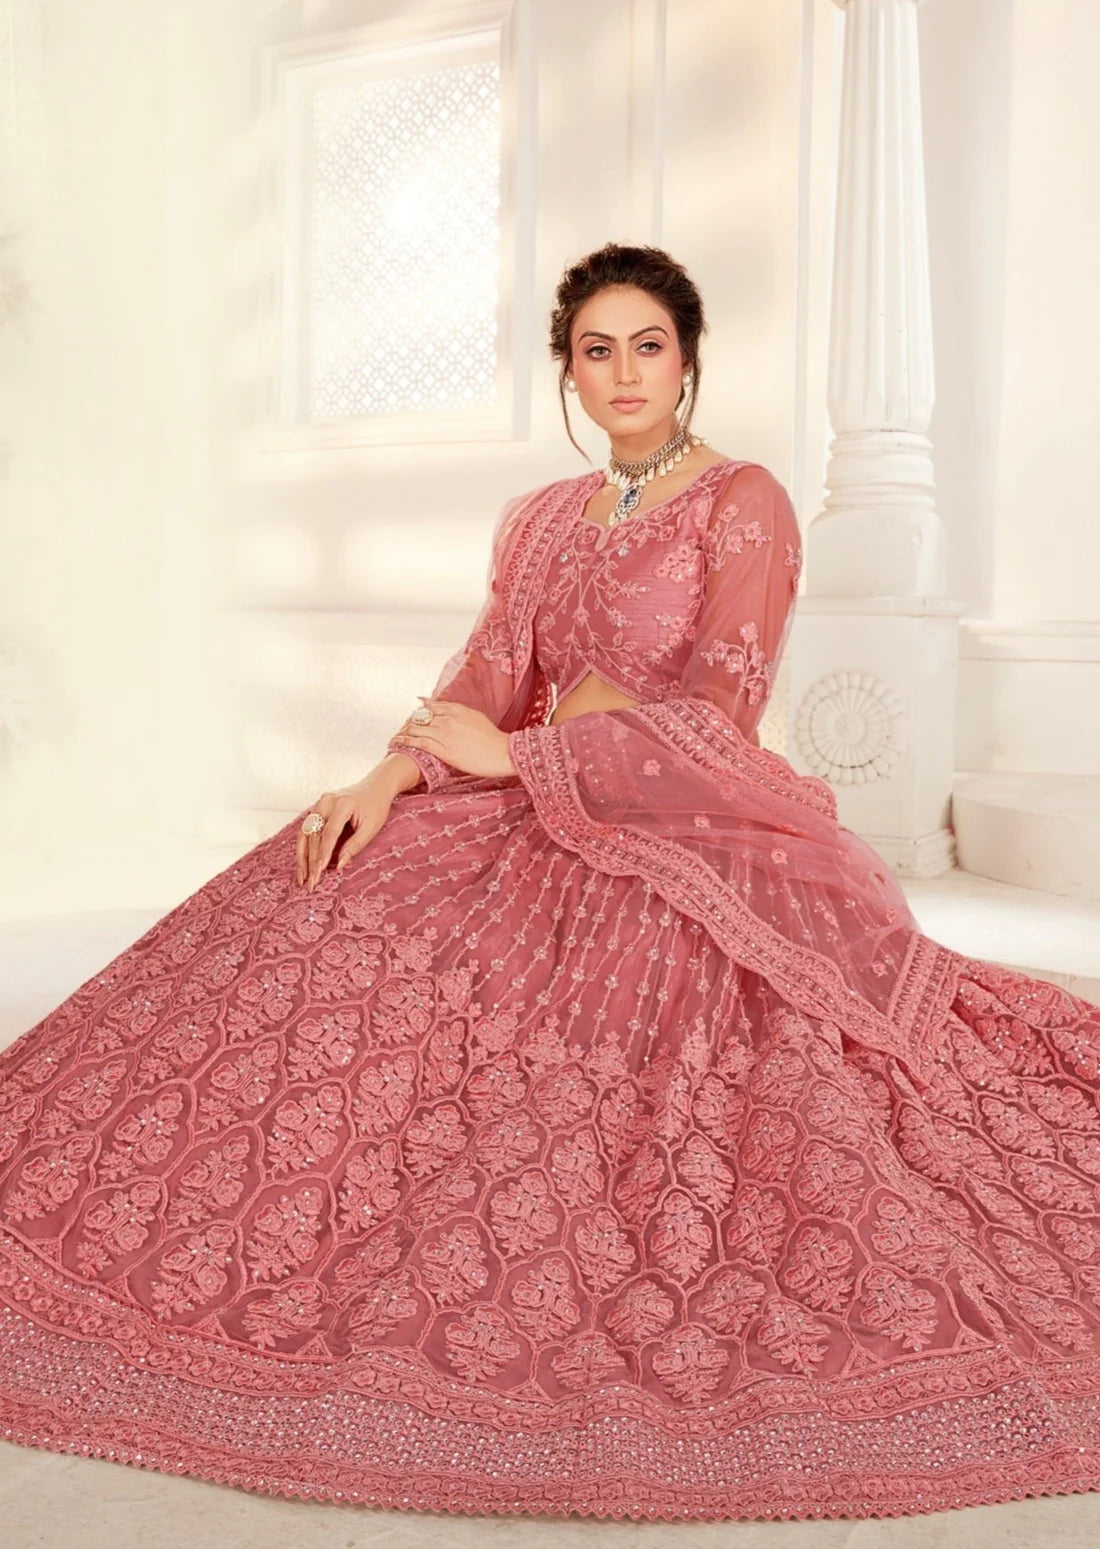 Women's rose pink lehenga choli online for bride.